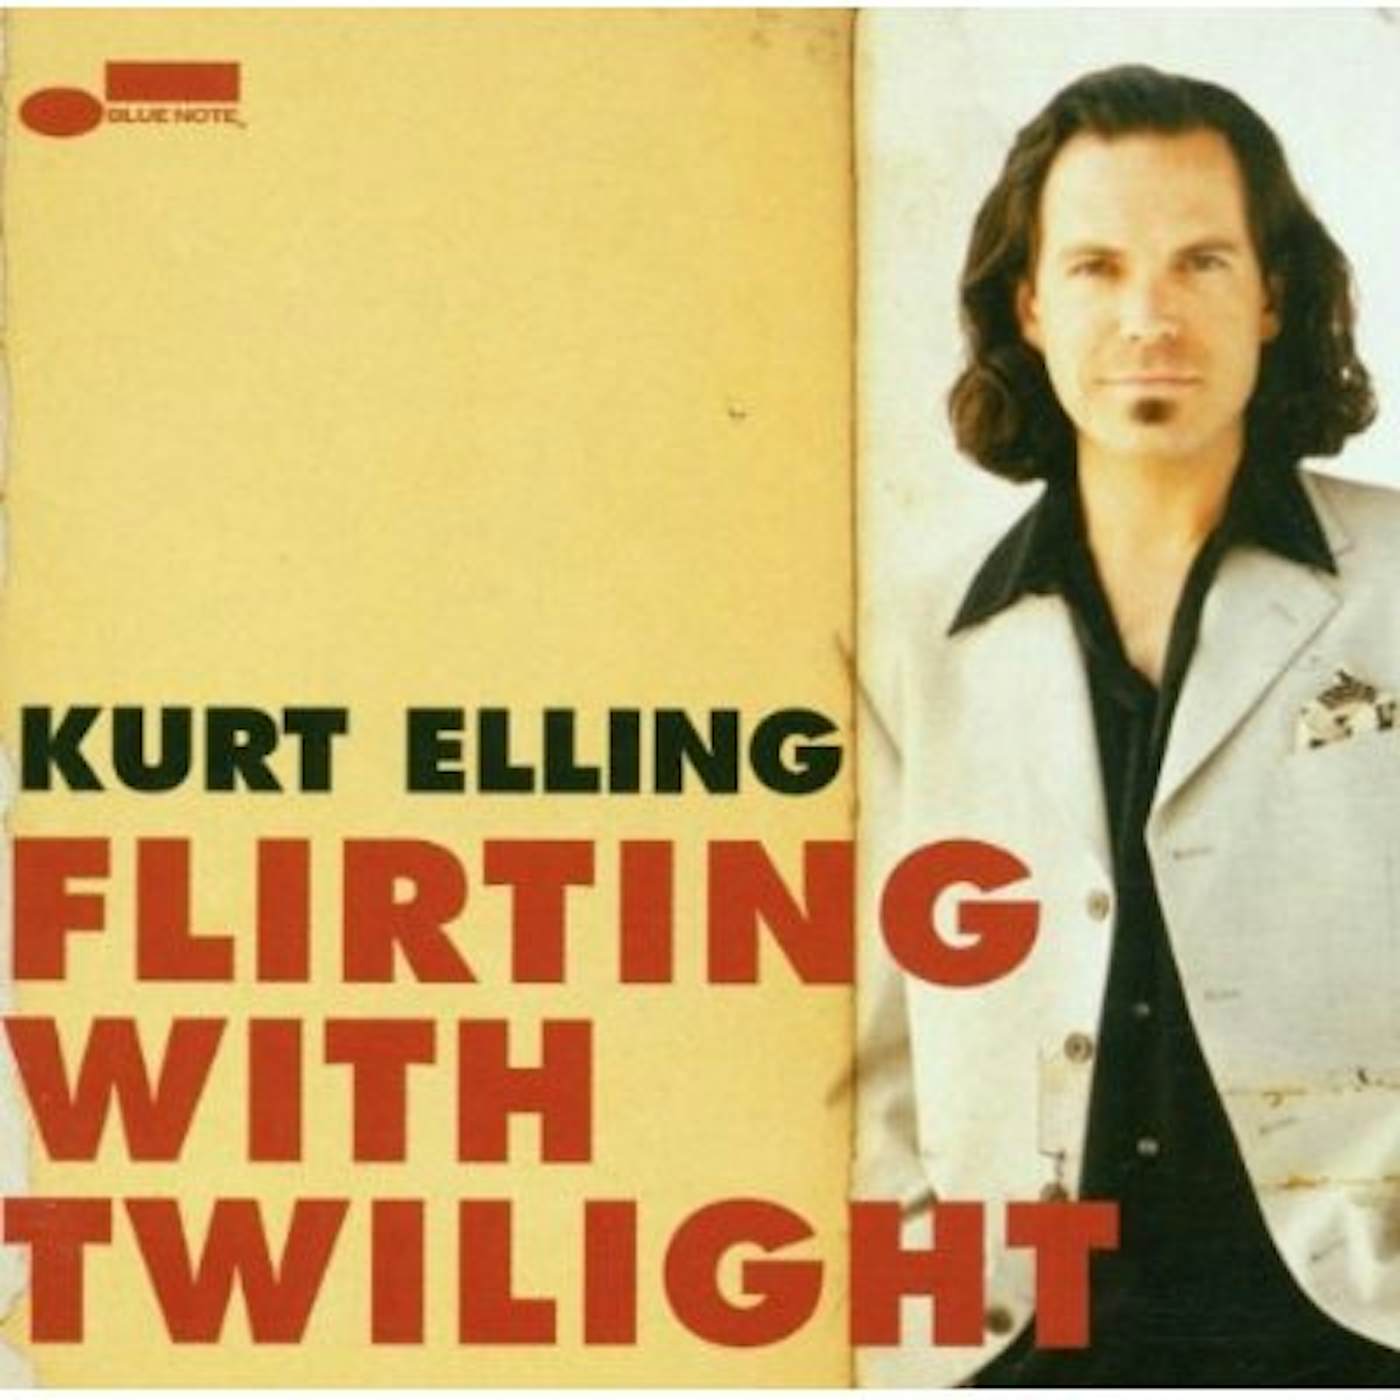 Kurt Elling FLIRTING WITH TWILIGHT CD